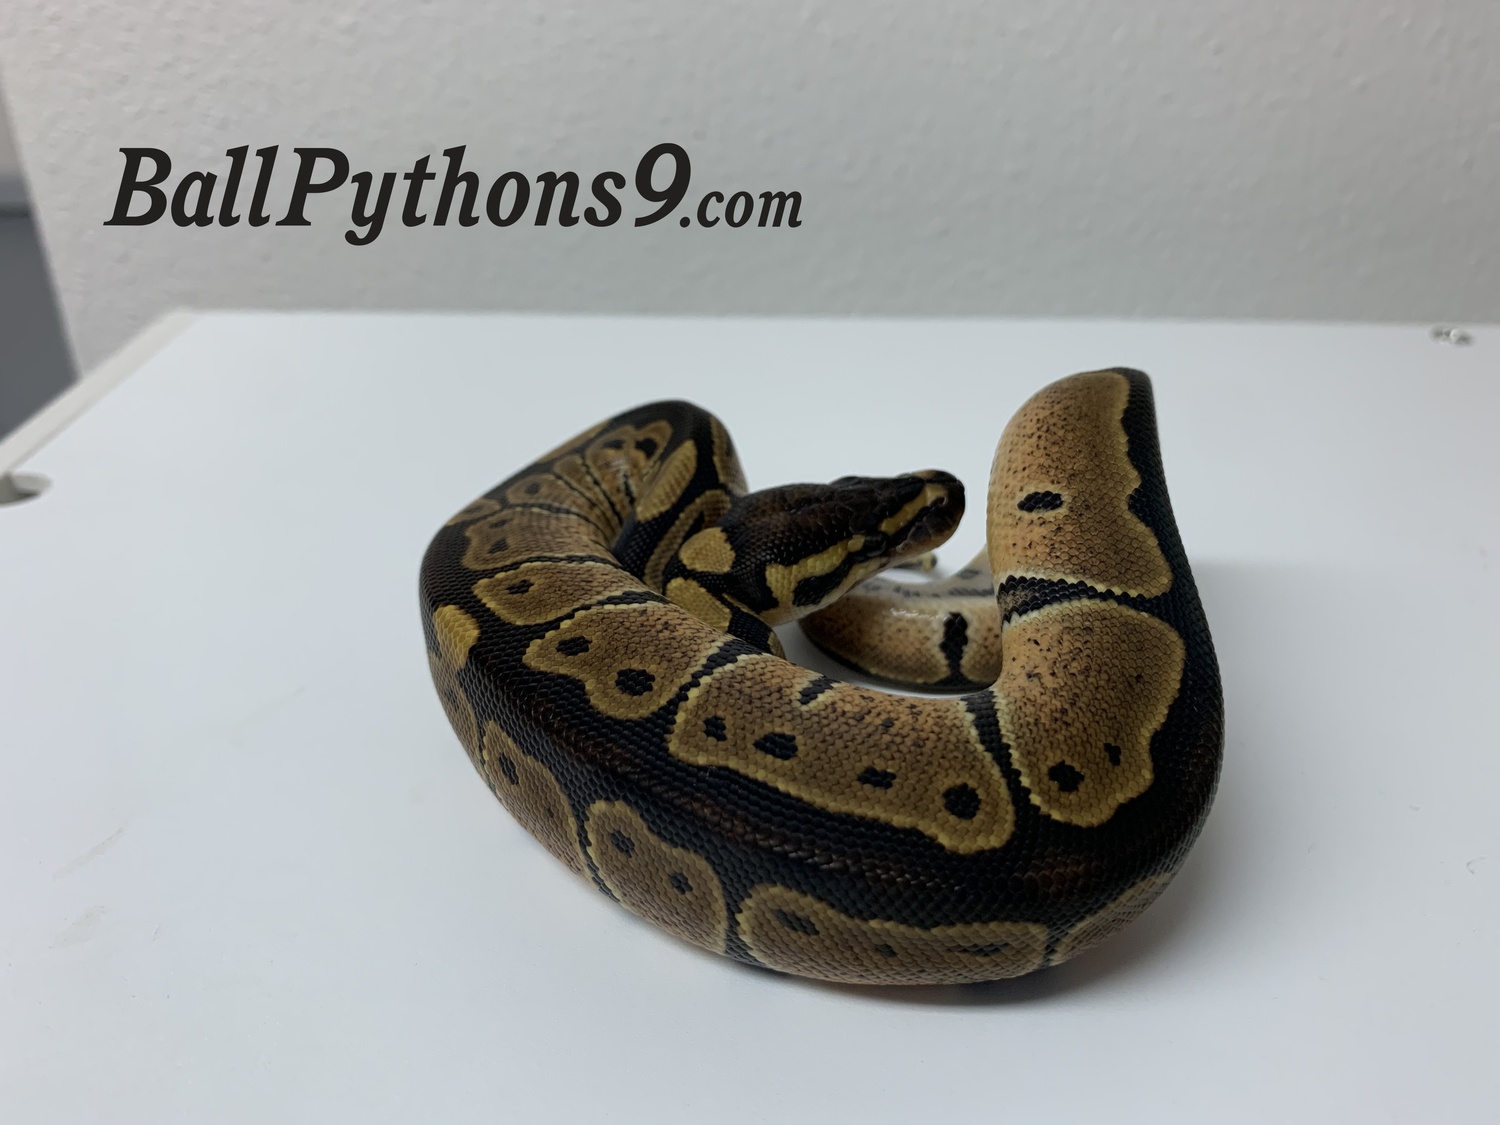 Blackback Ball Python by BallPythons9